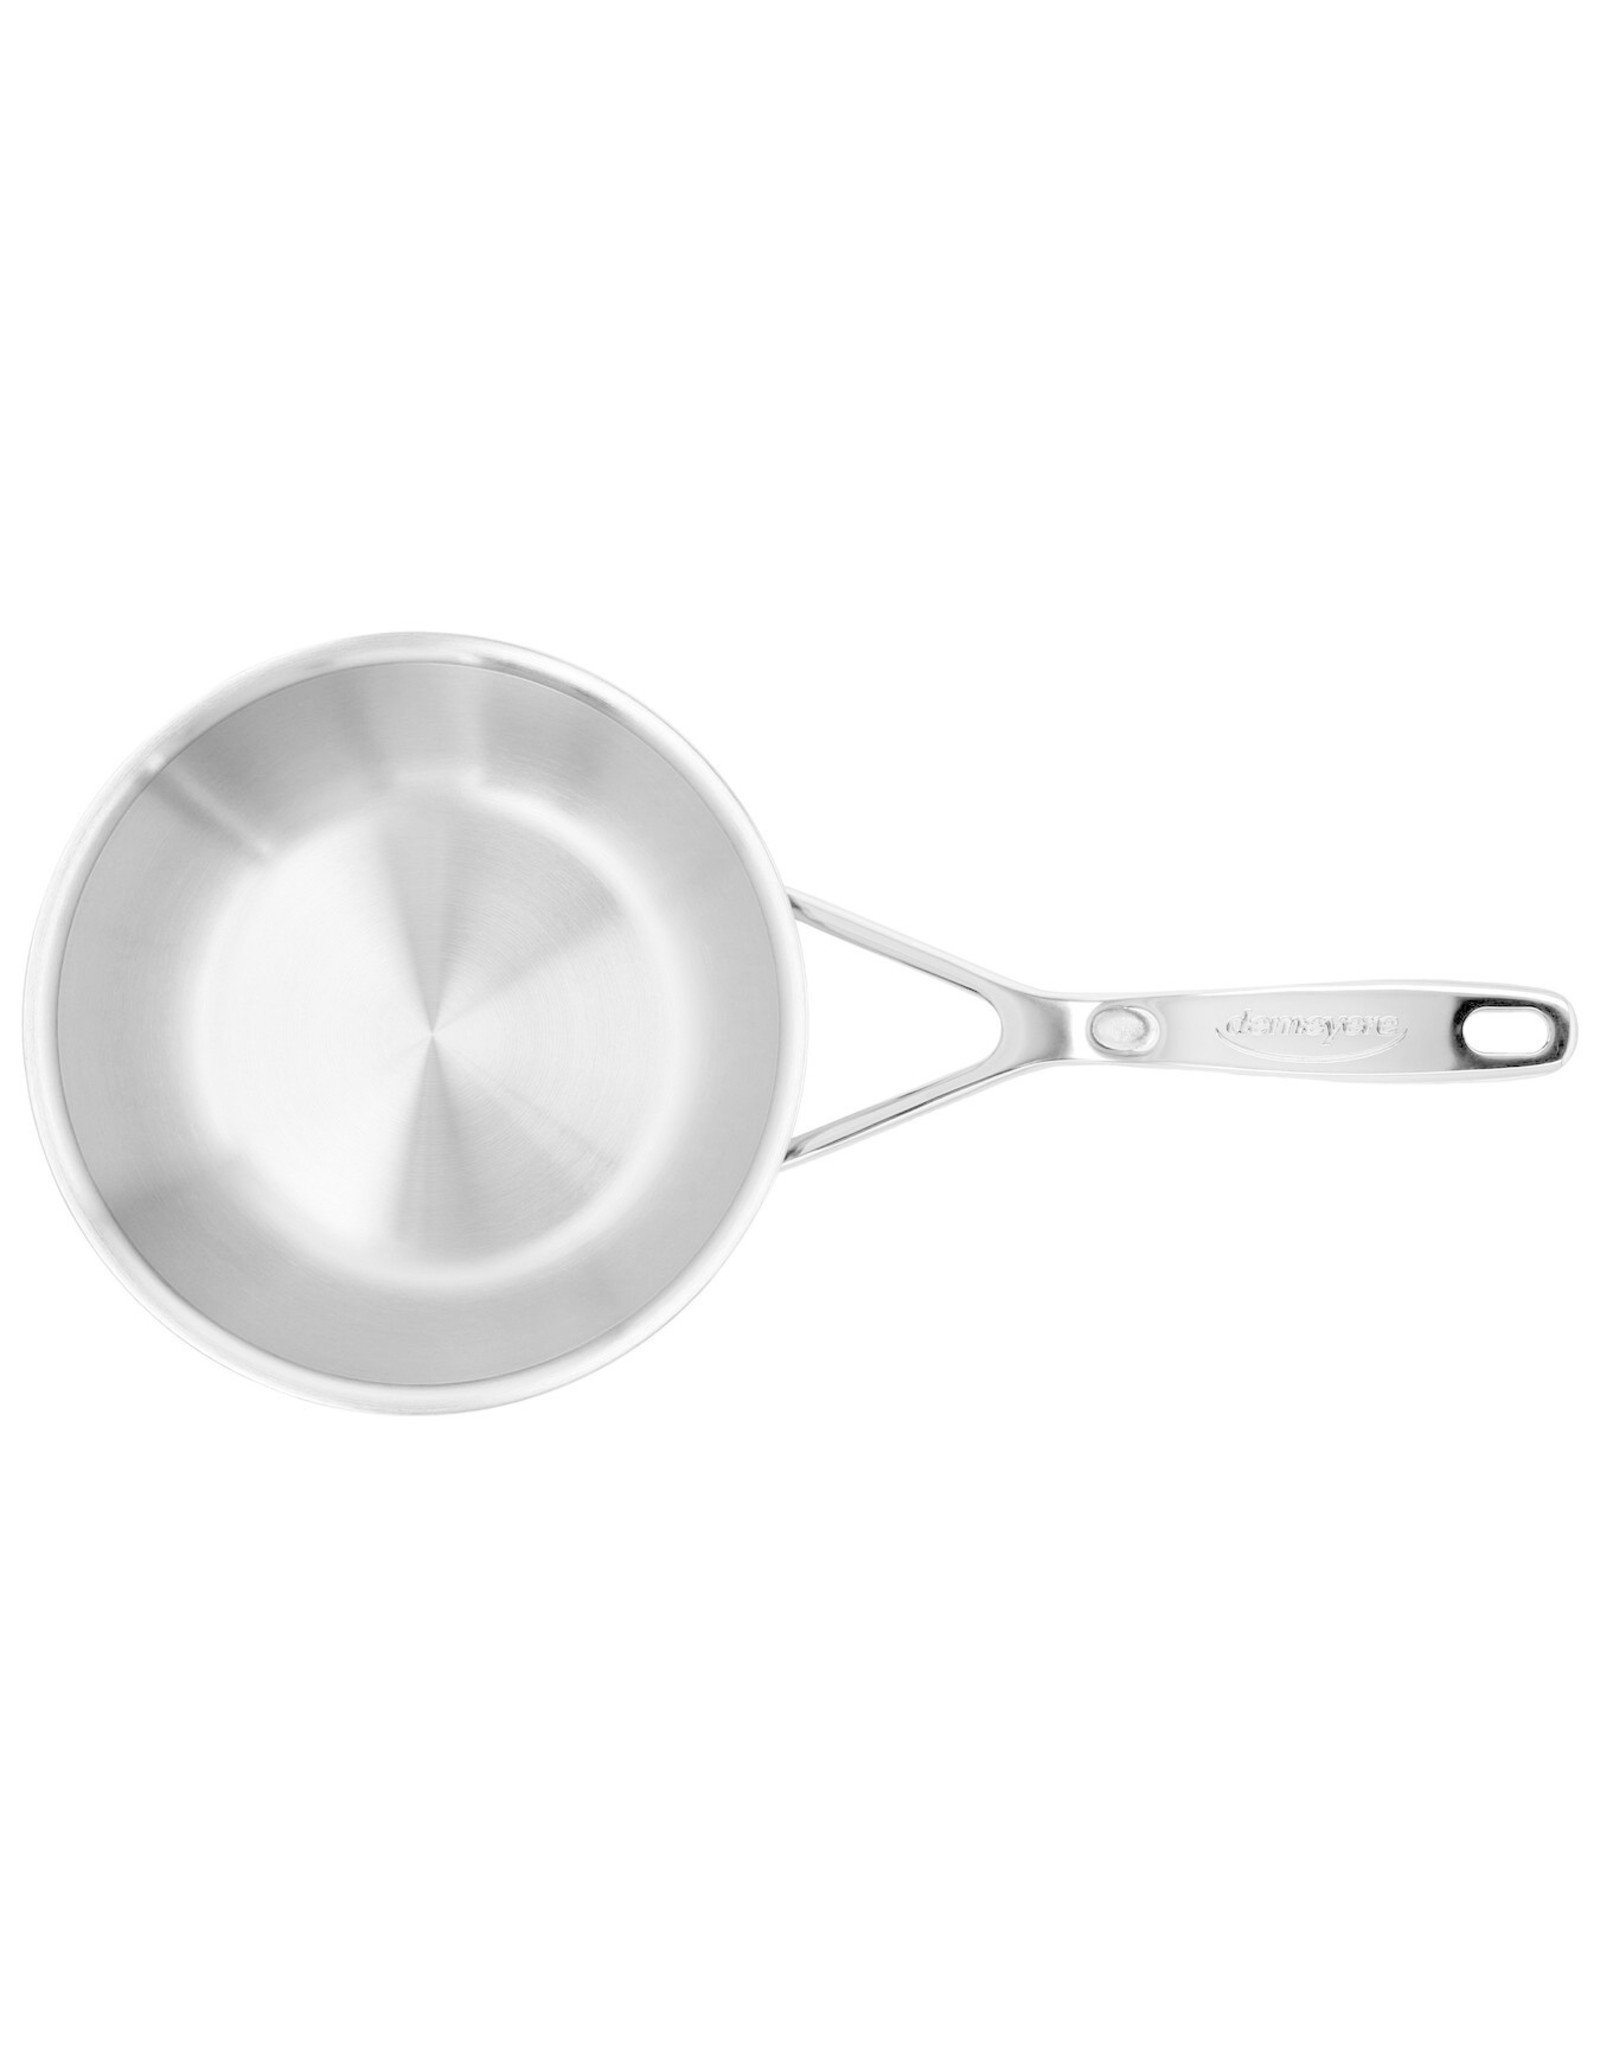 Demeyere Conische Sauspan - Silver 7 - 18 cm / 1.5L